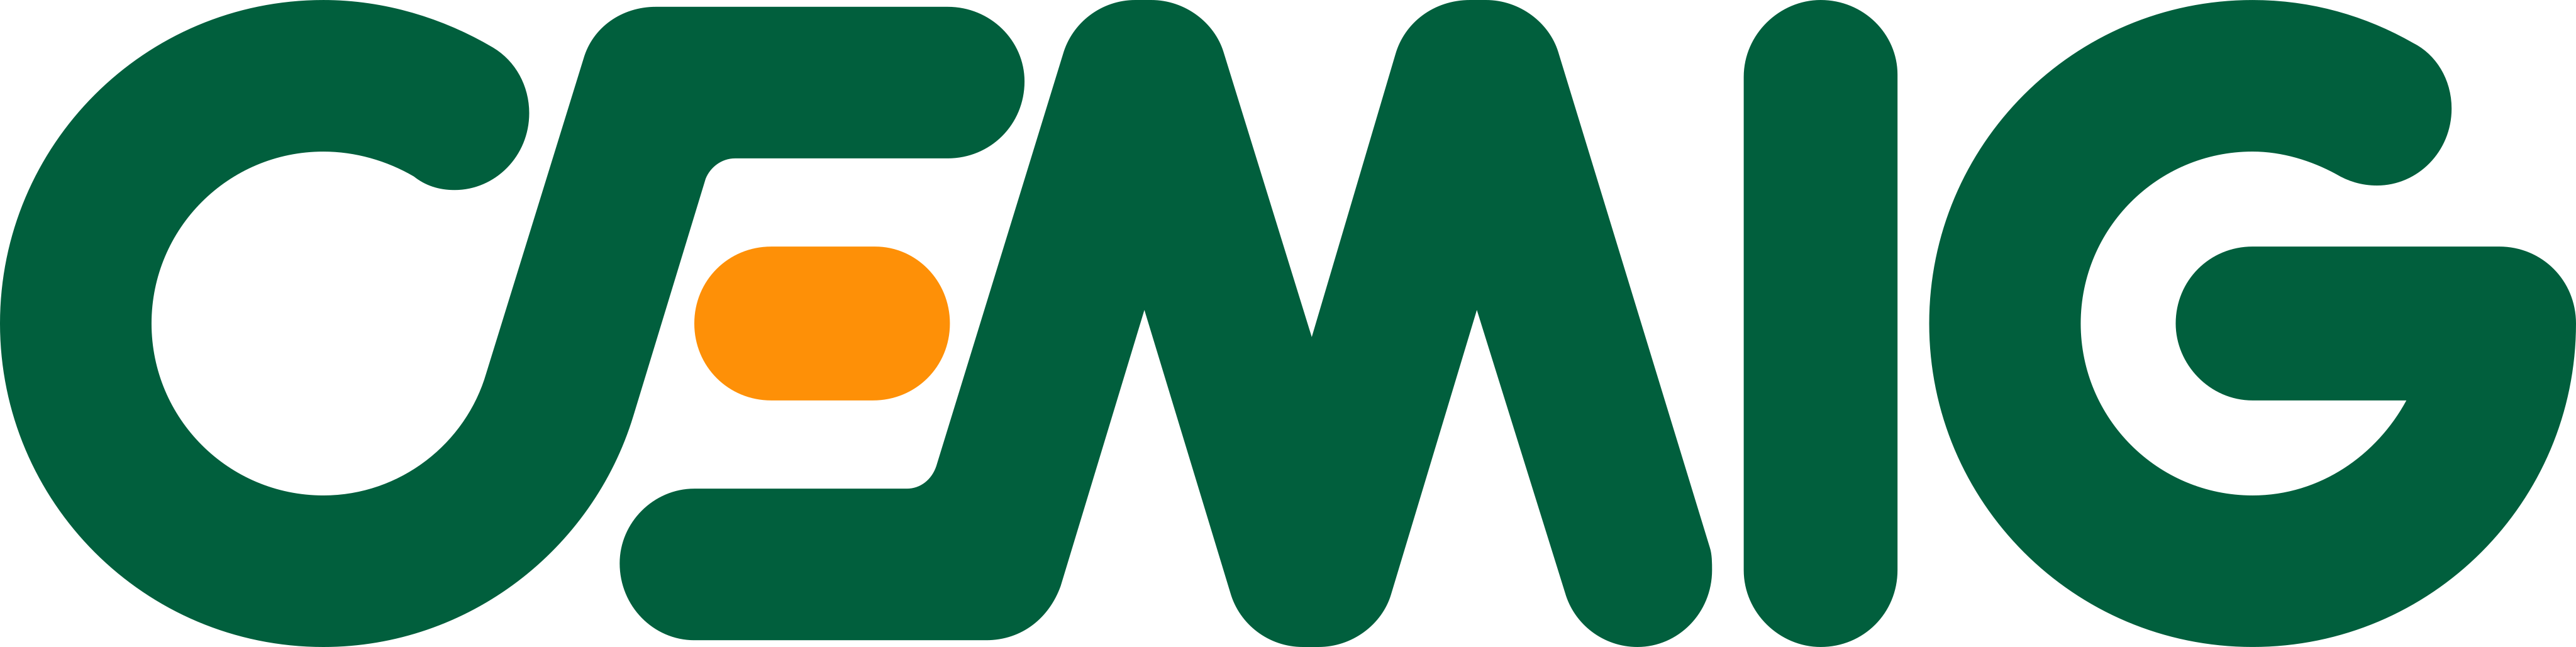 cemig-logo